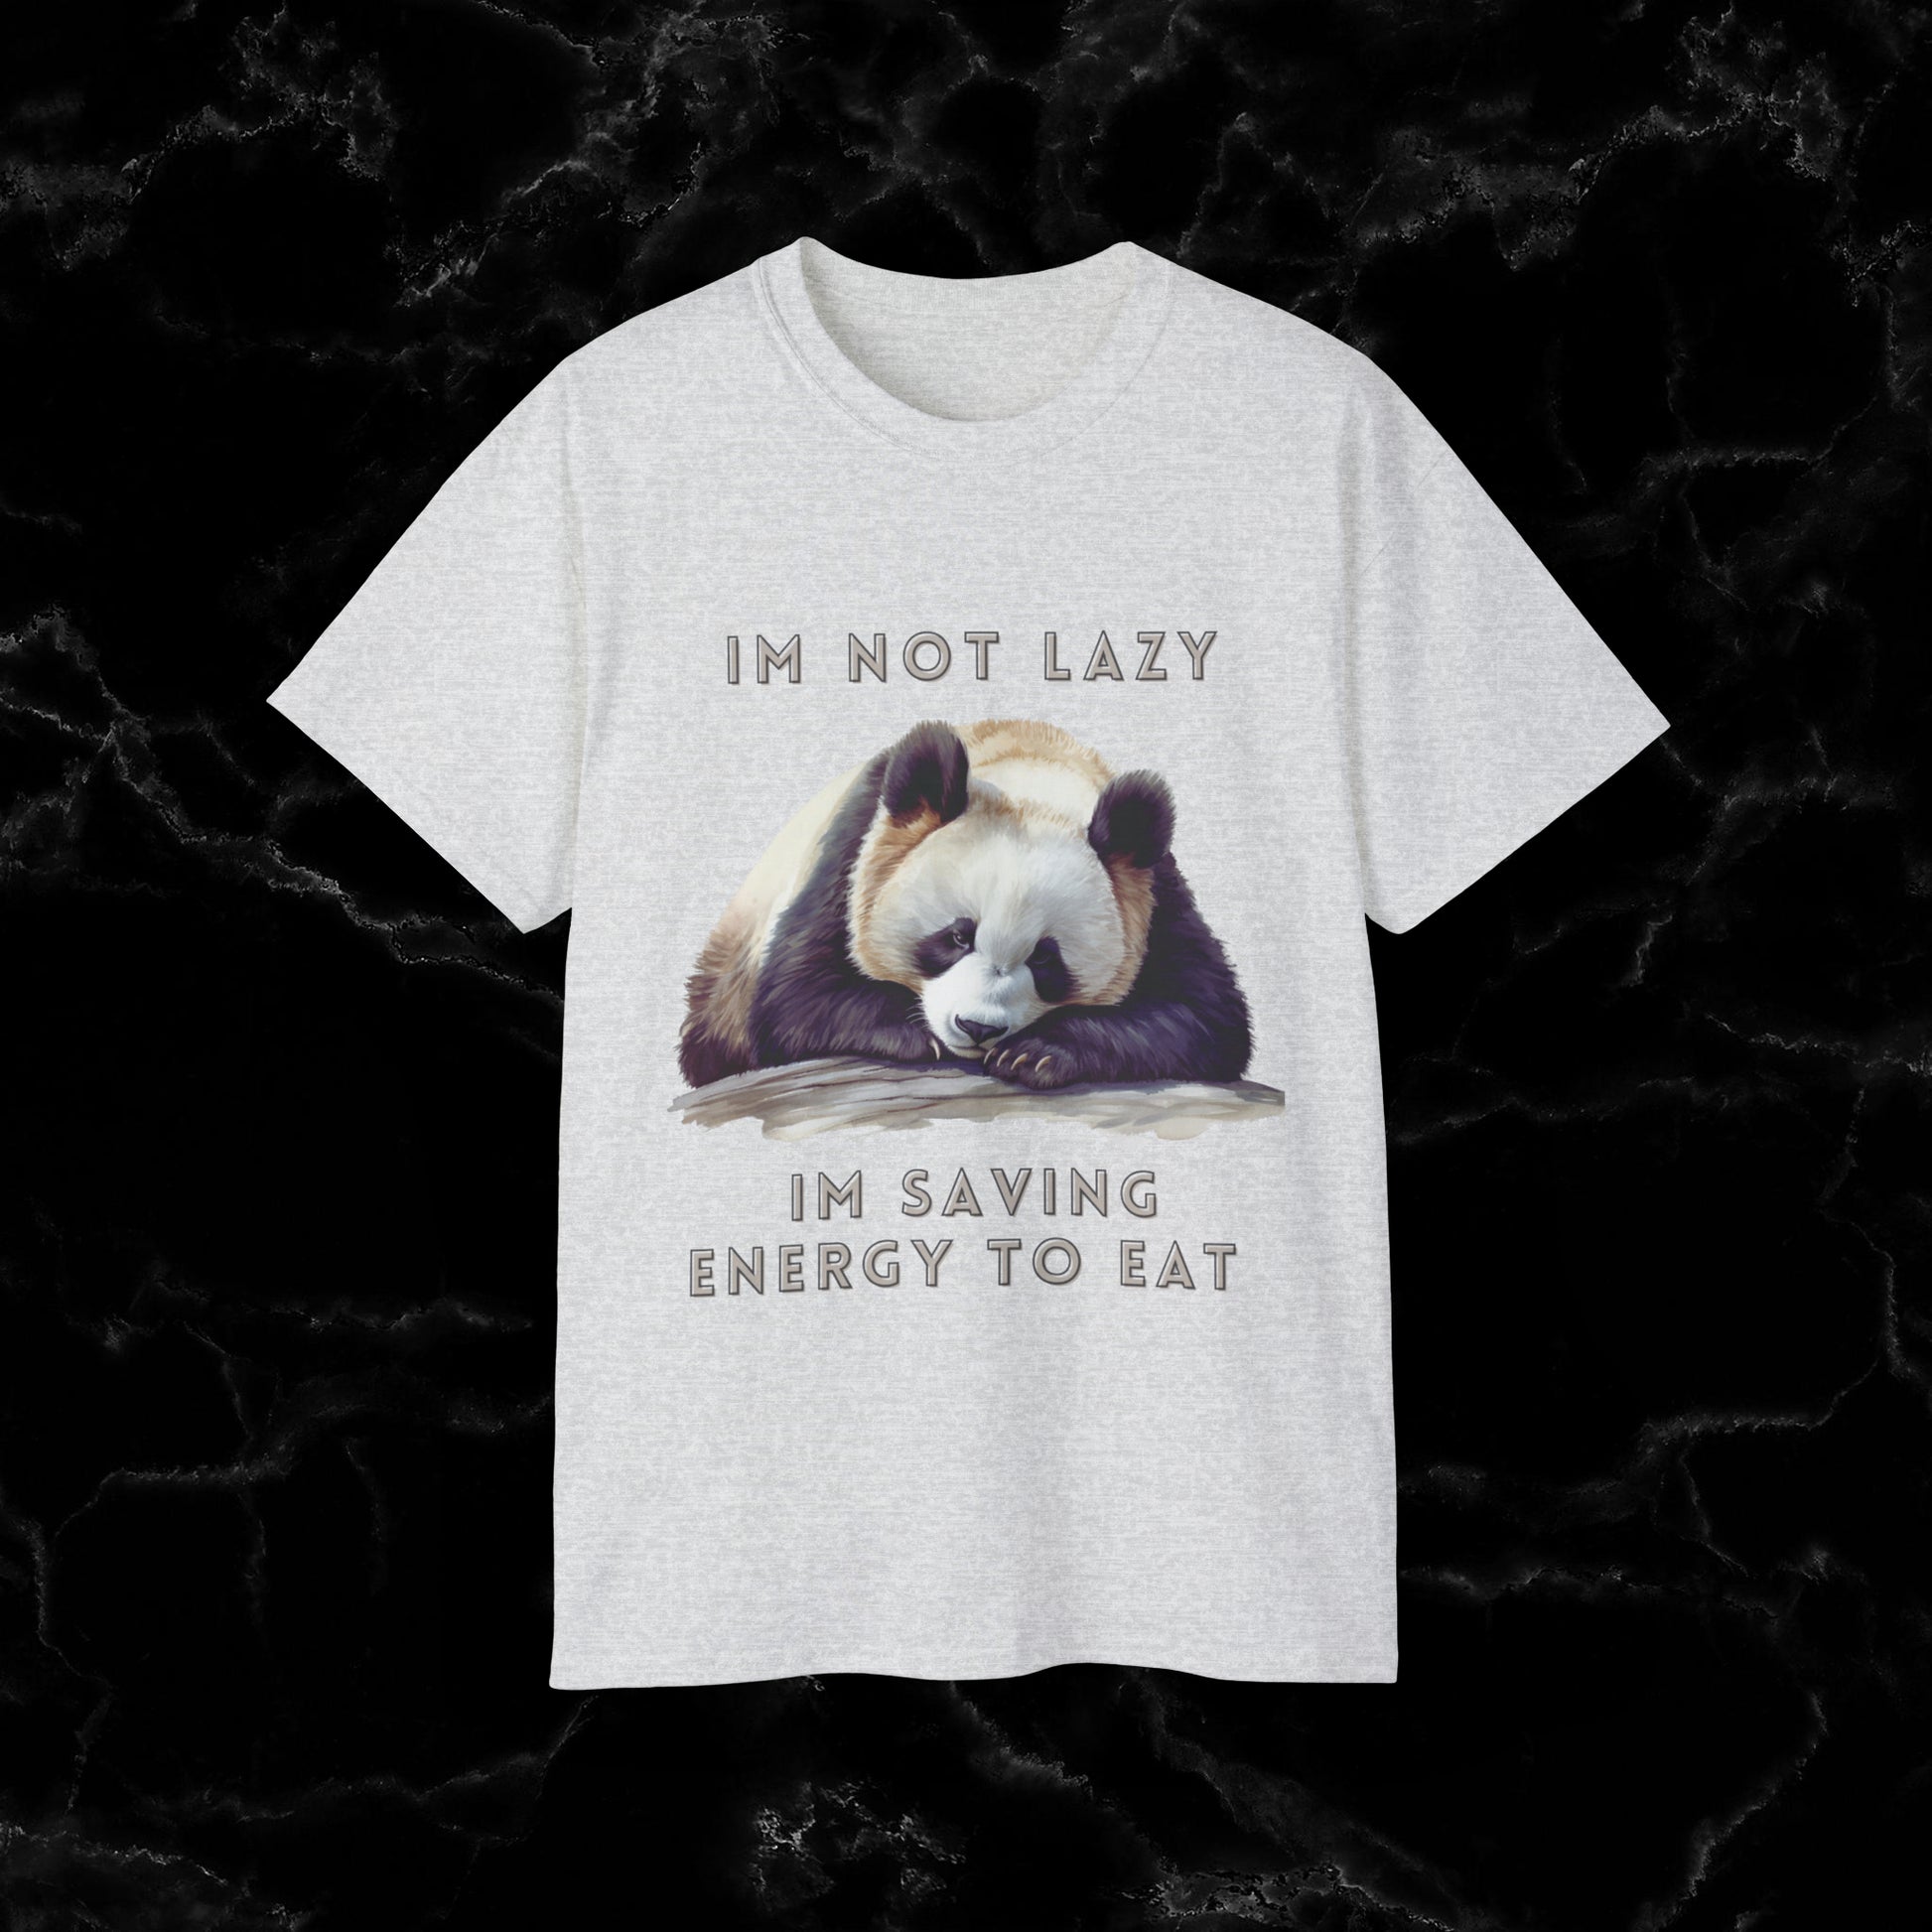 Nap Time Panda Unisex Funny Tee - Hilarious Panda Nap Design - I'm Not Lazy, I'm Saving Energy to Eat T-Shirt Ash S 